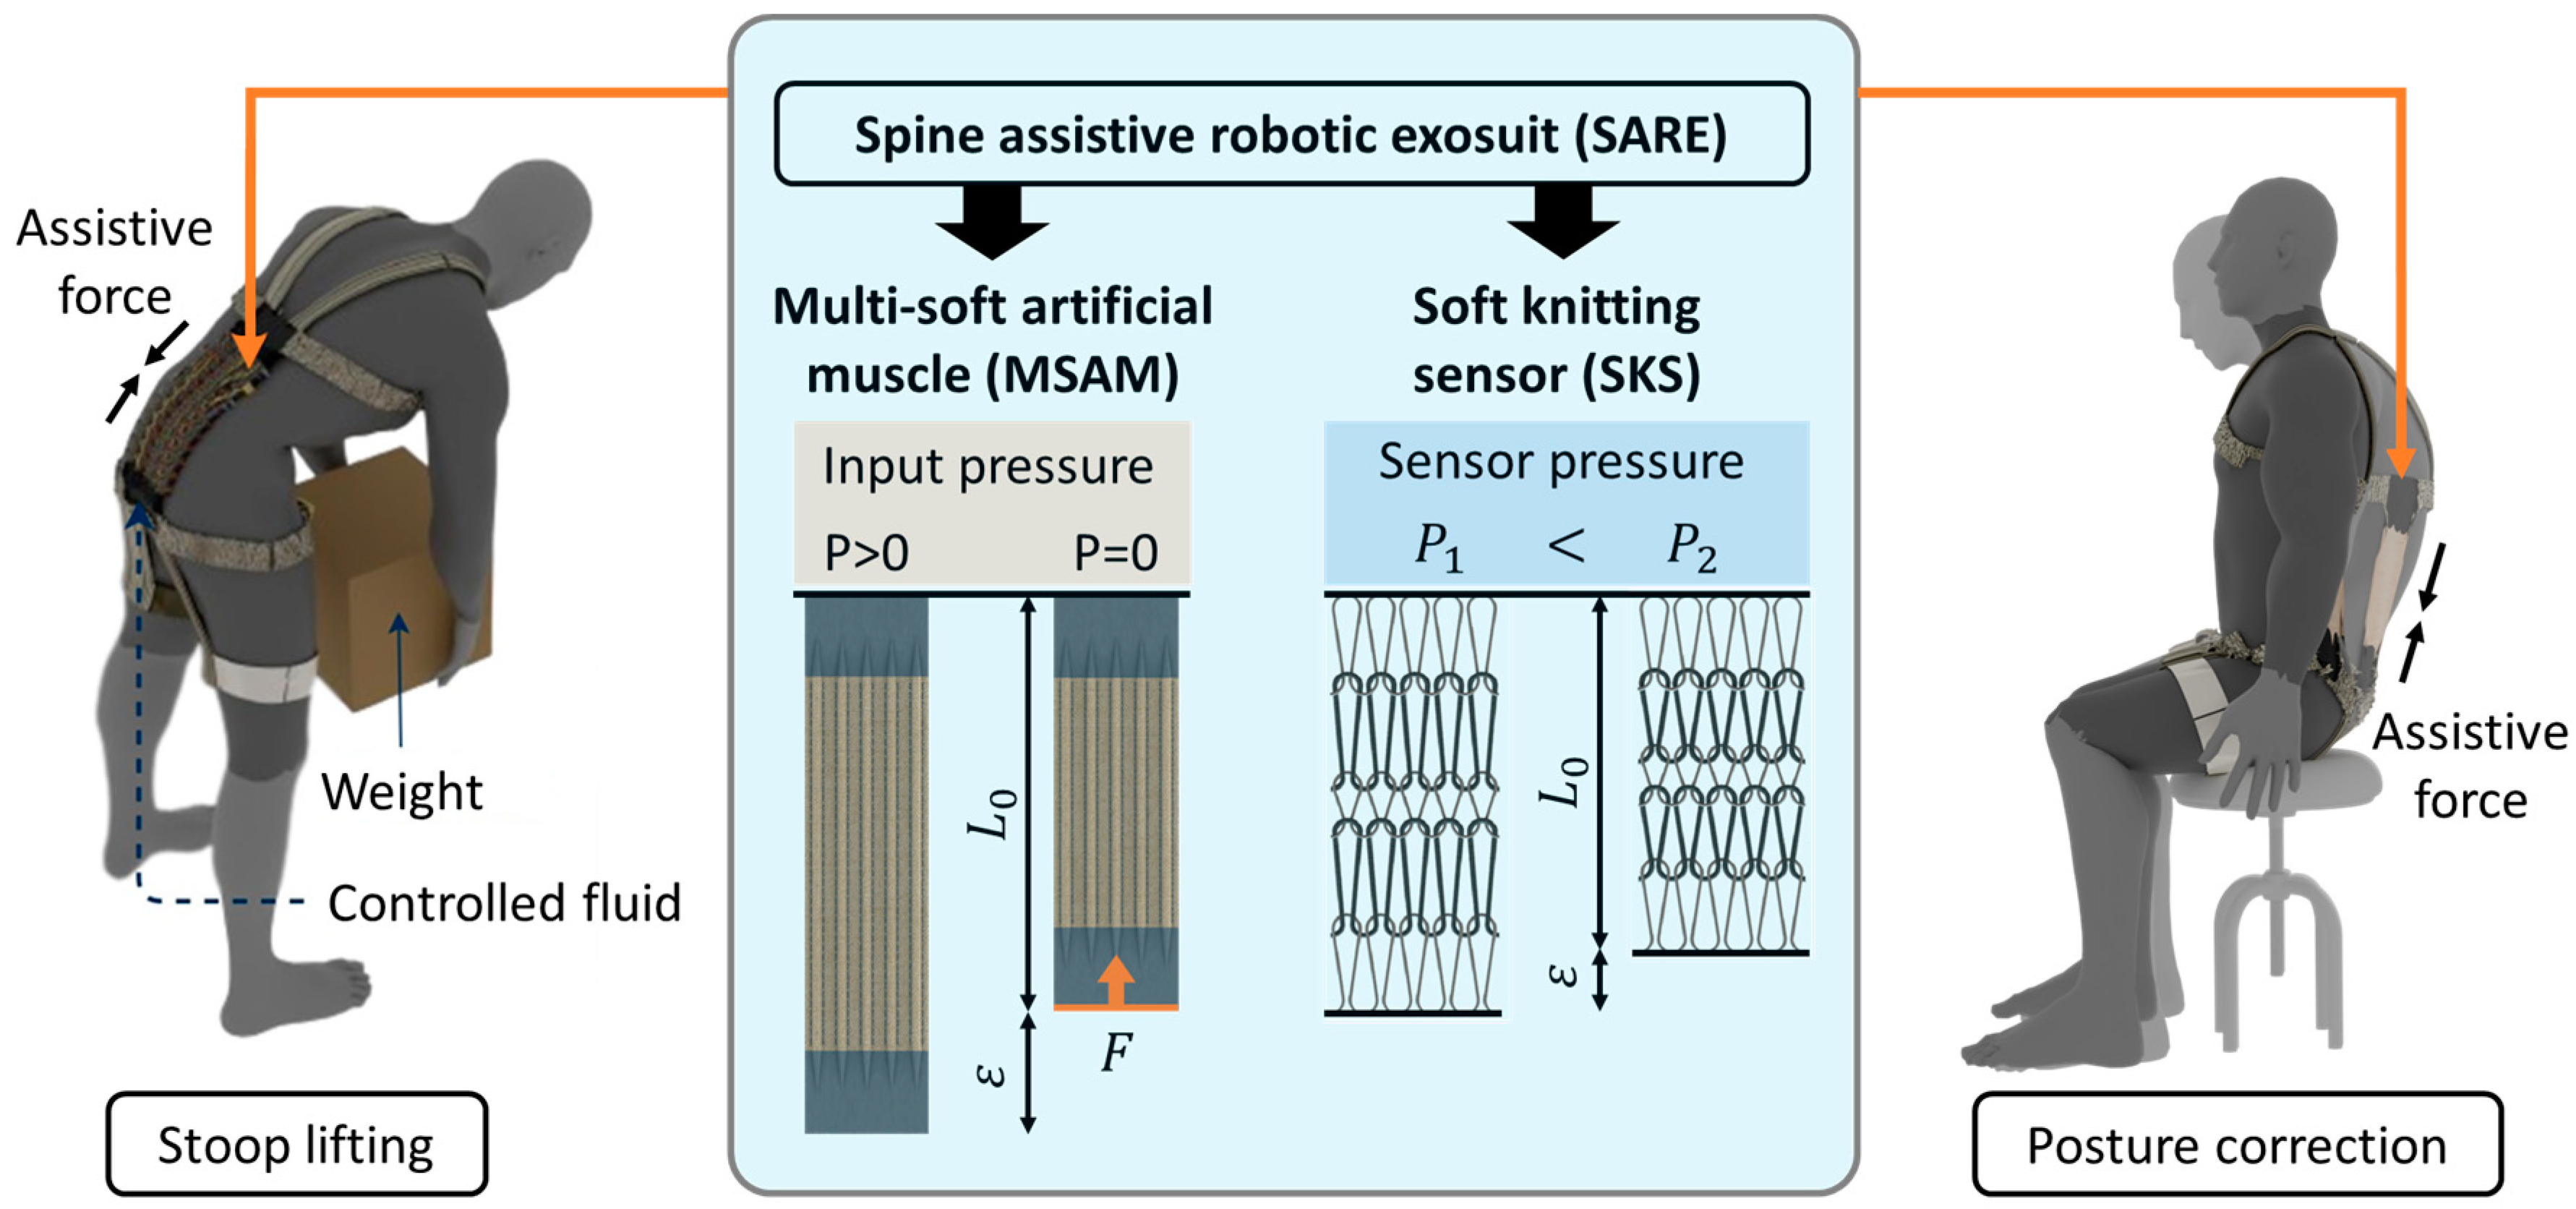 Smart Fabric to Benefit Posture Ergonomics - IEEE Research